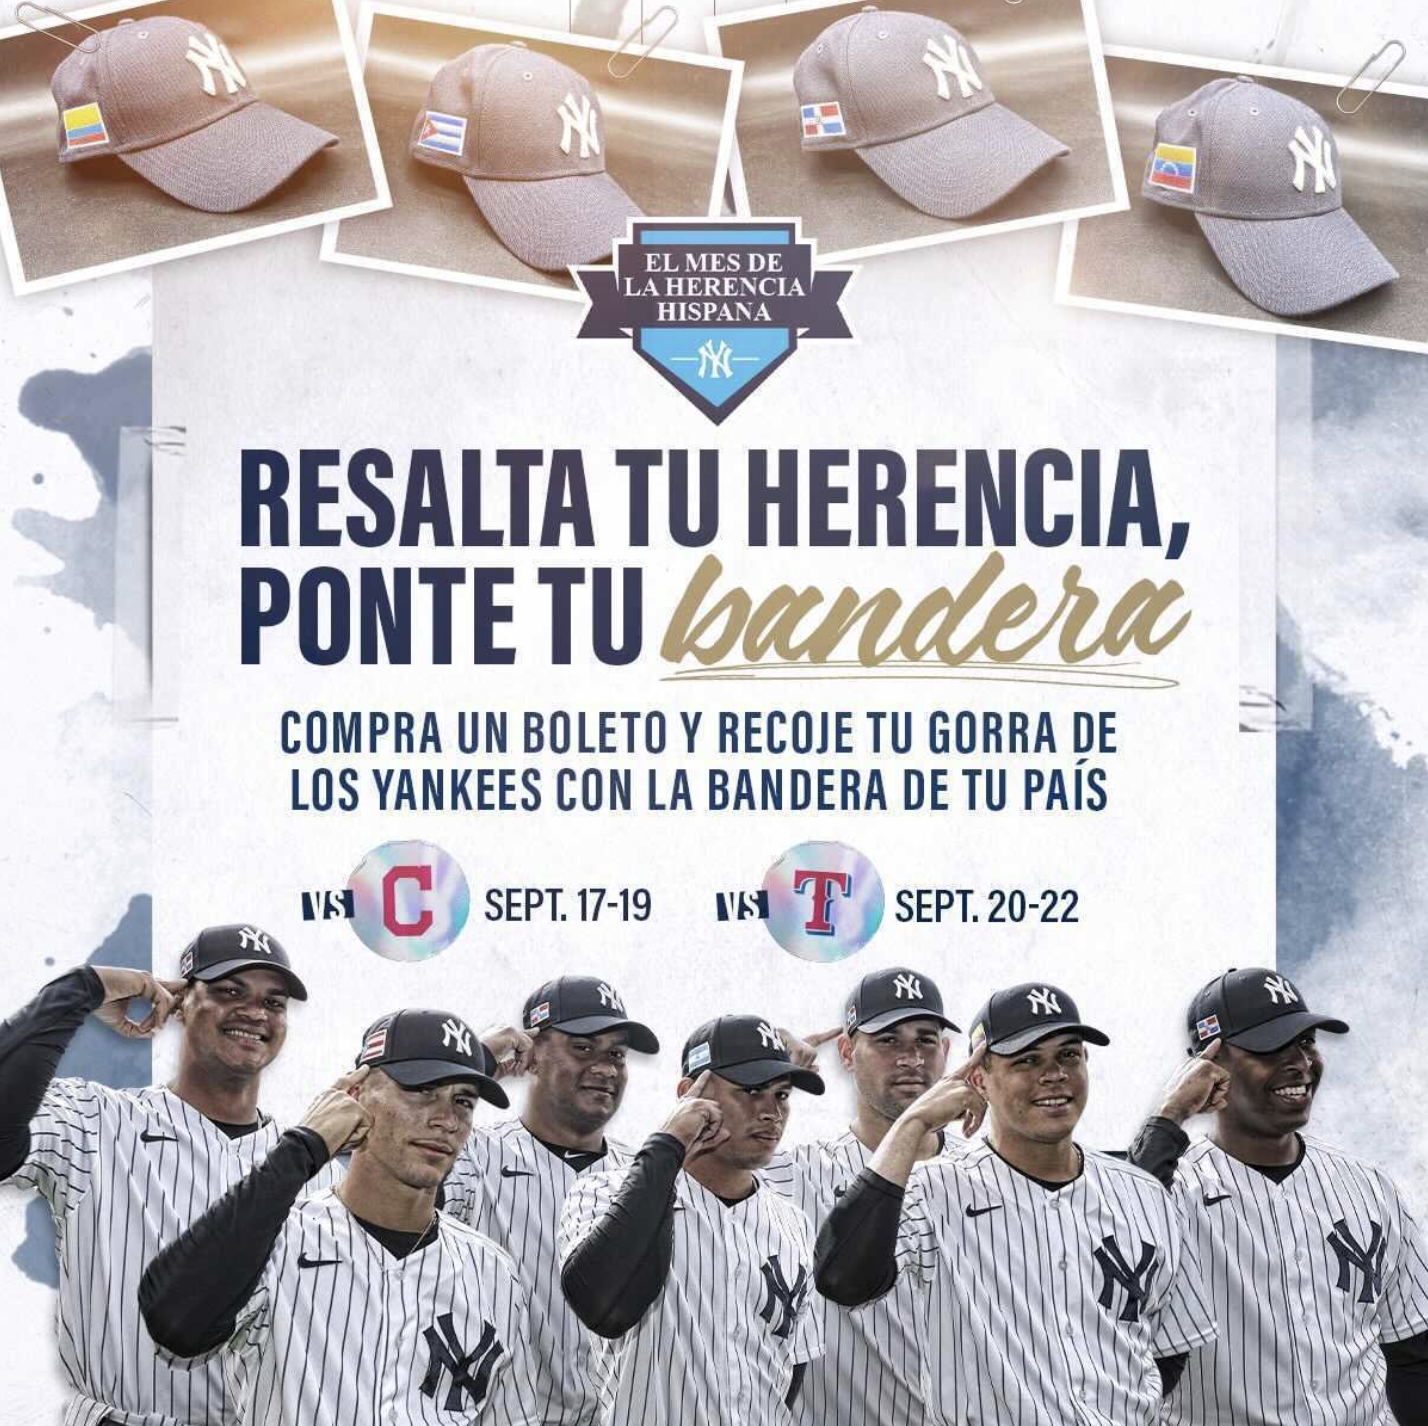 Yankees Celebrate Hispanic Heritage Month